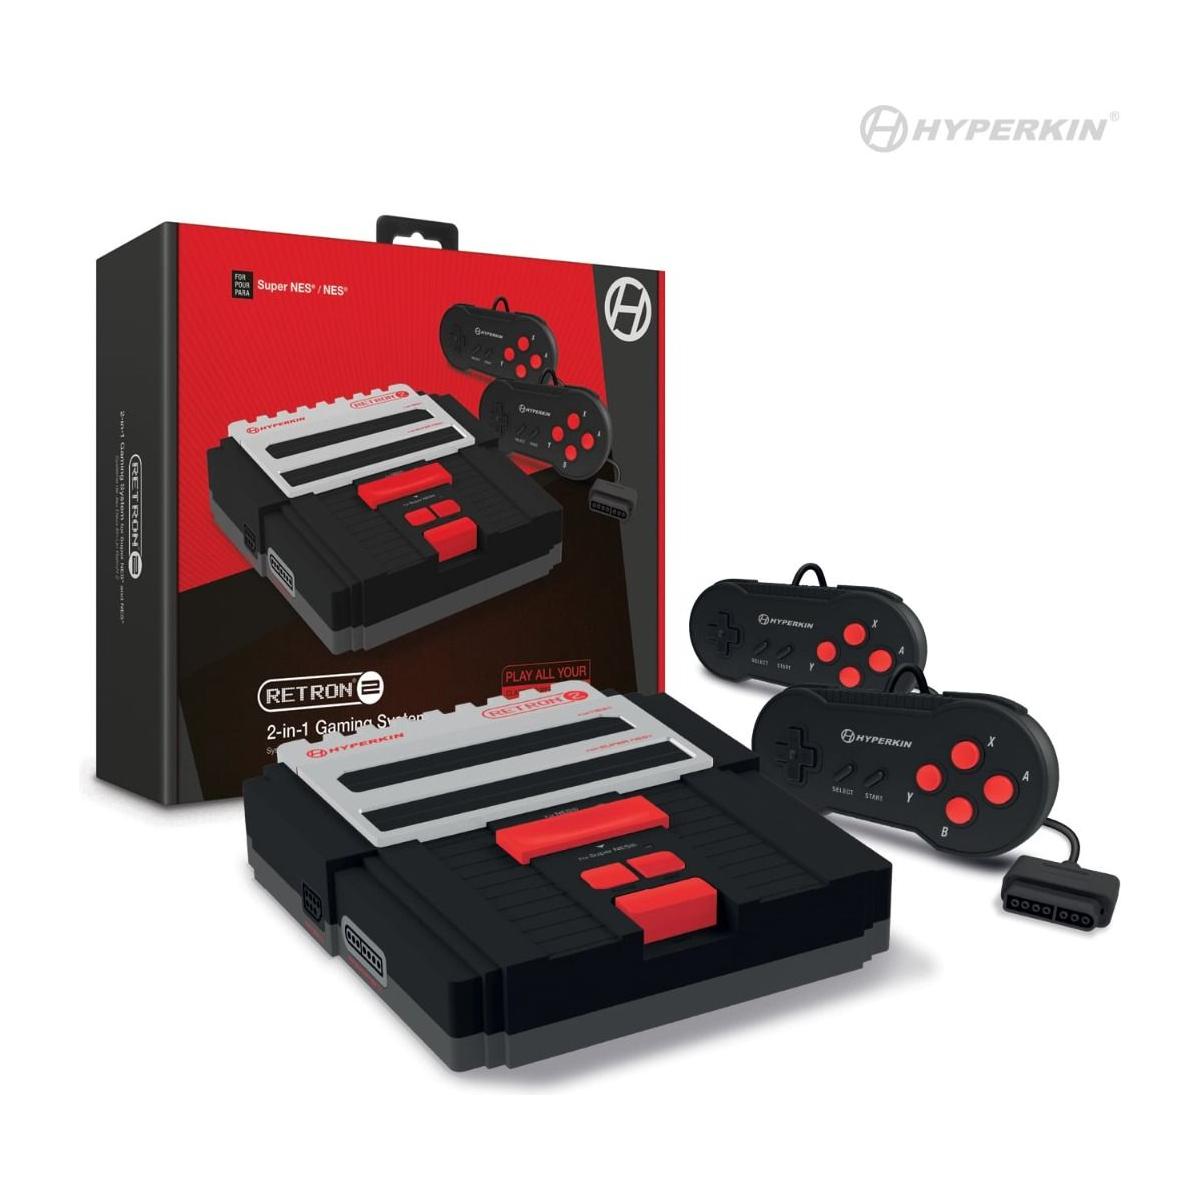 Retron 2 AV Console (NES/SNES) (Black)